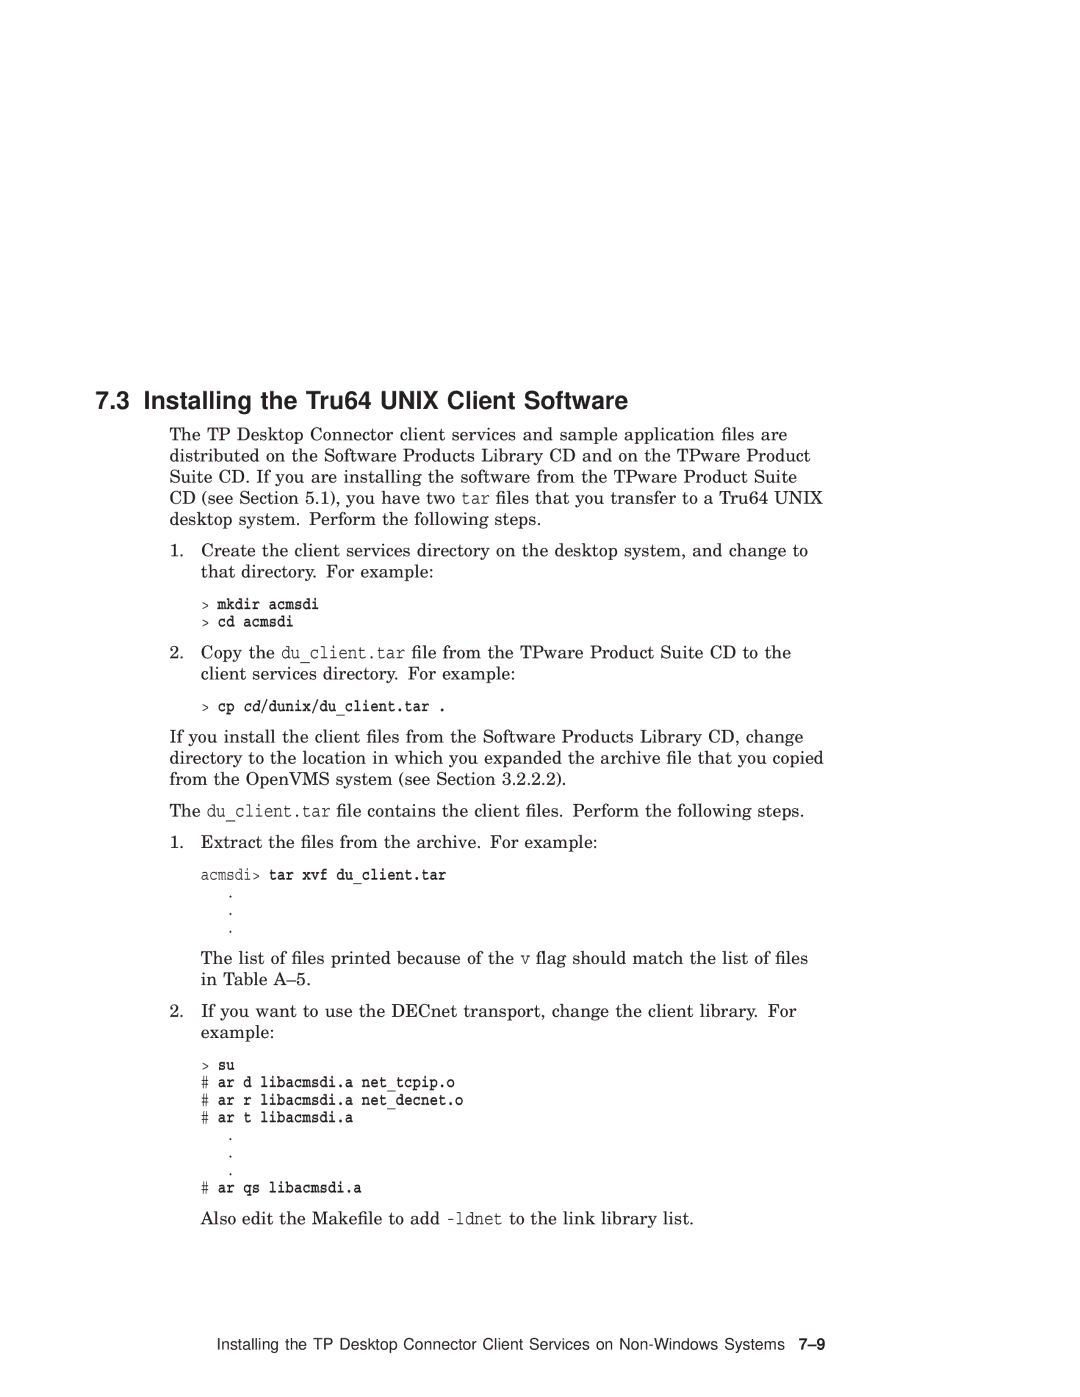 Compaq AAPG9DKTE manual Installing the Tru64 Unix Client Software, Mkdir acmsdi Cd acmsdi, Cp cd/dunix/duclient.tar 